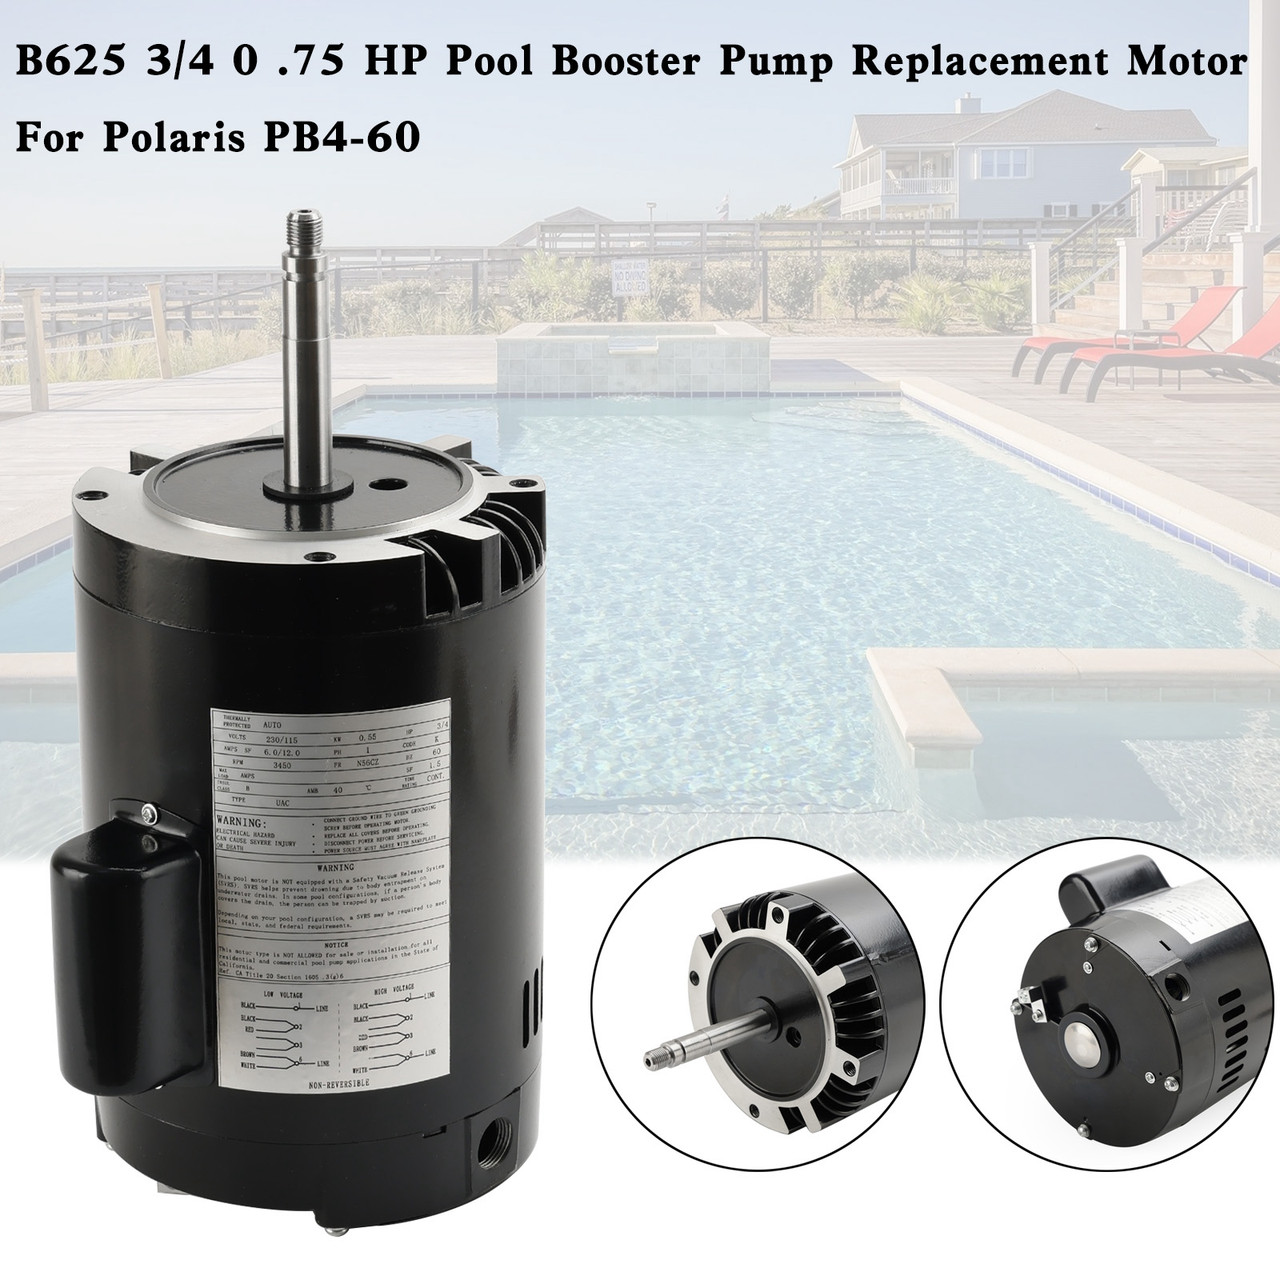 B625 3/4 0.75 HP Pool Booster Pump Replacement Motor For Polaris PB4-60